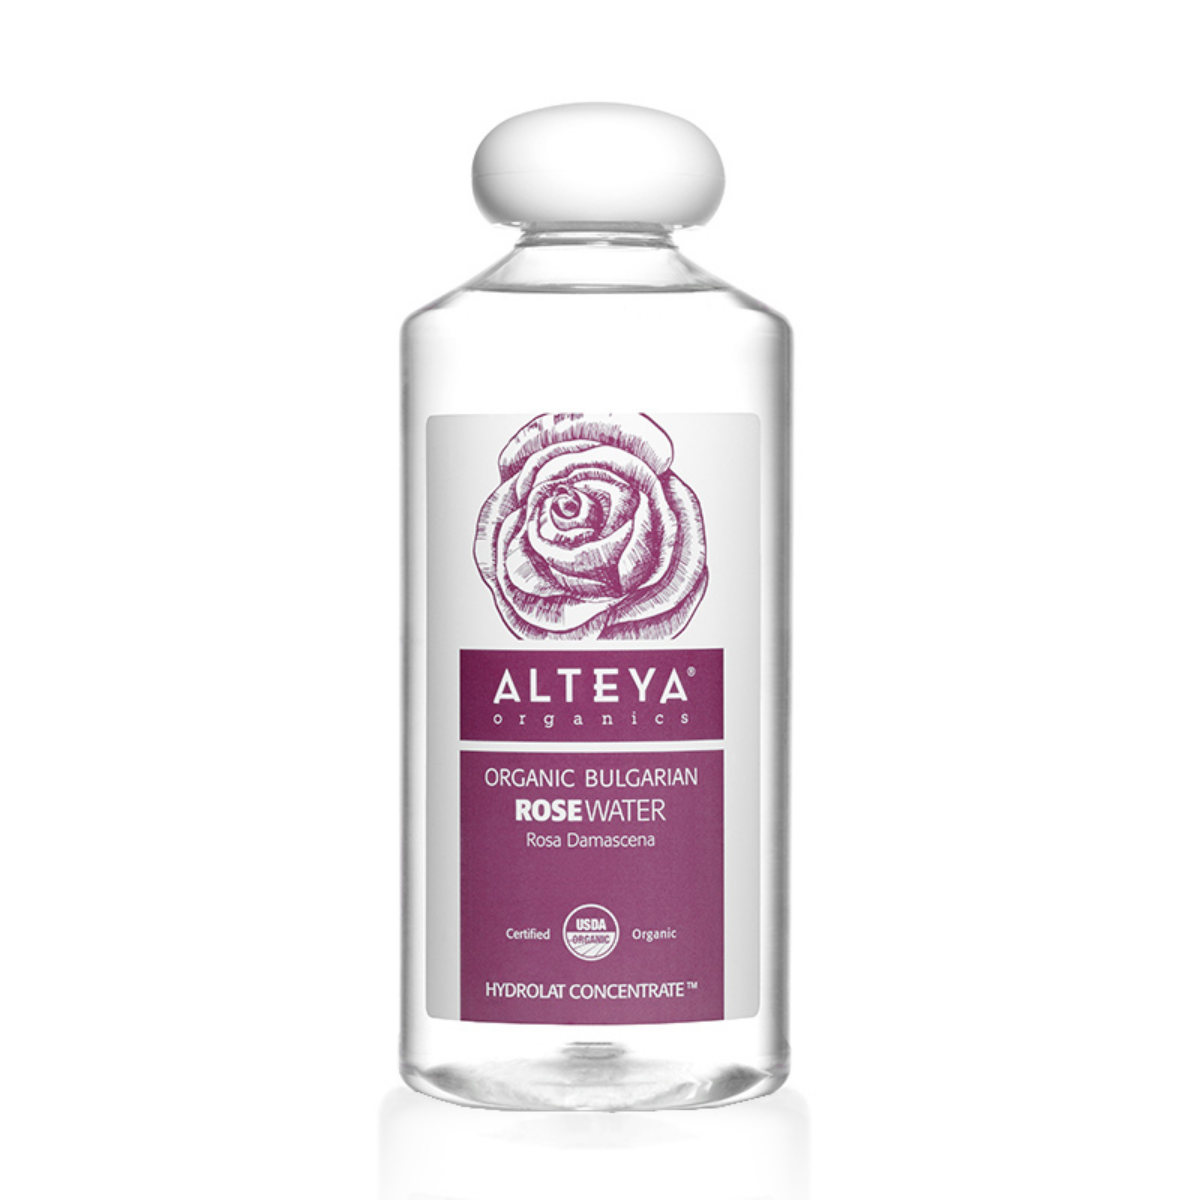 Primary image of Organic Bulgarian Rose Water